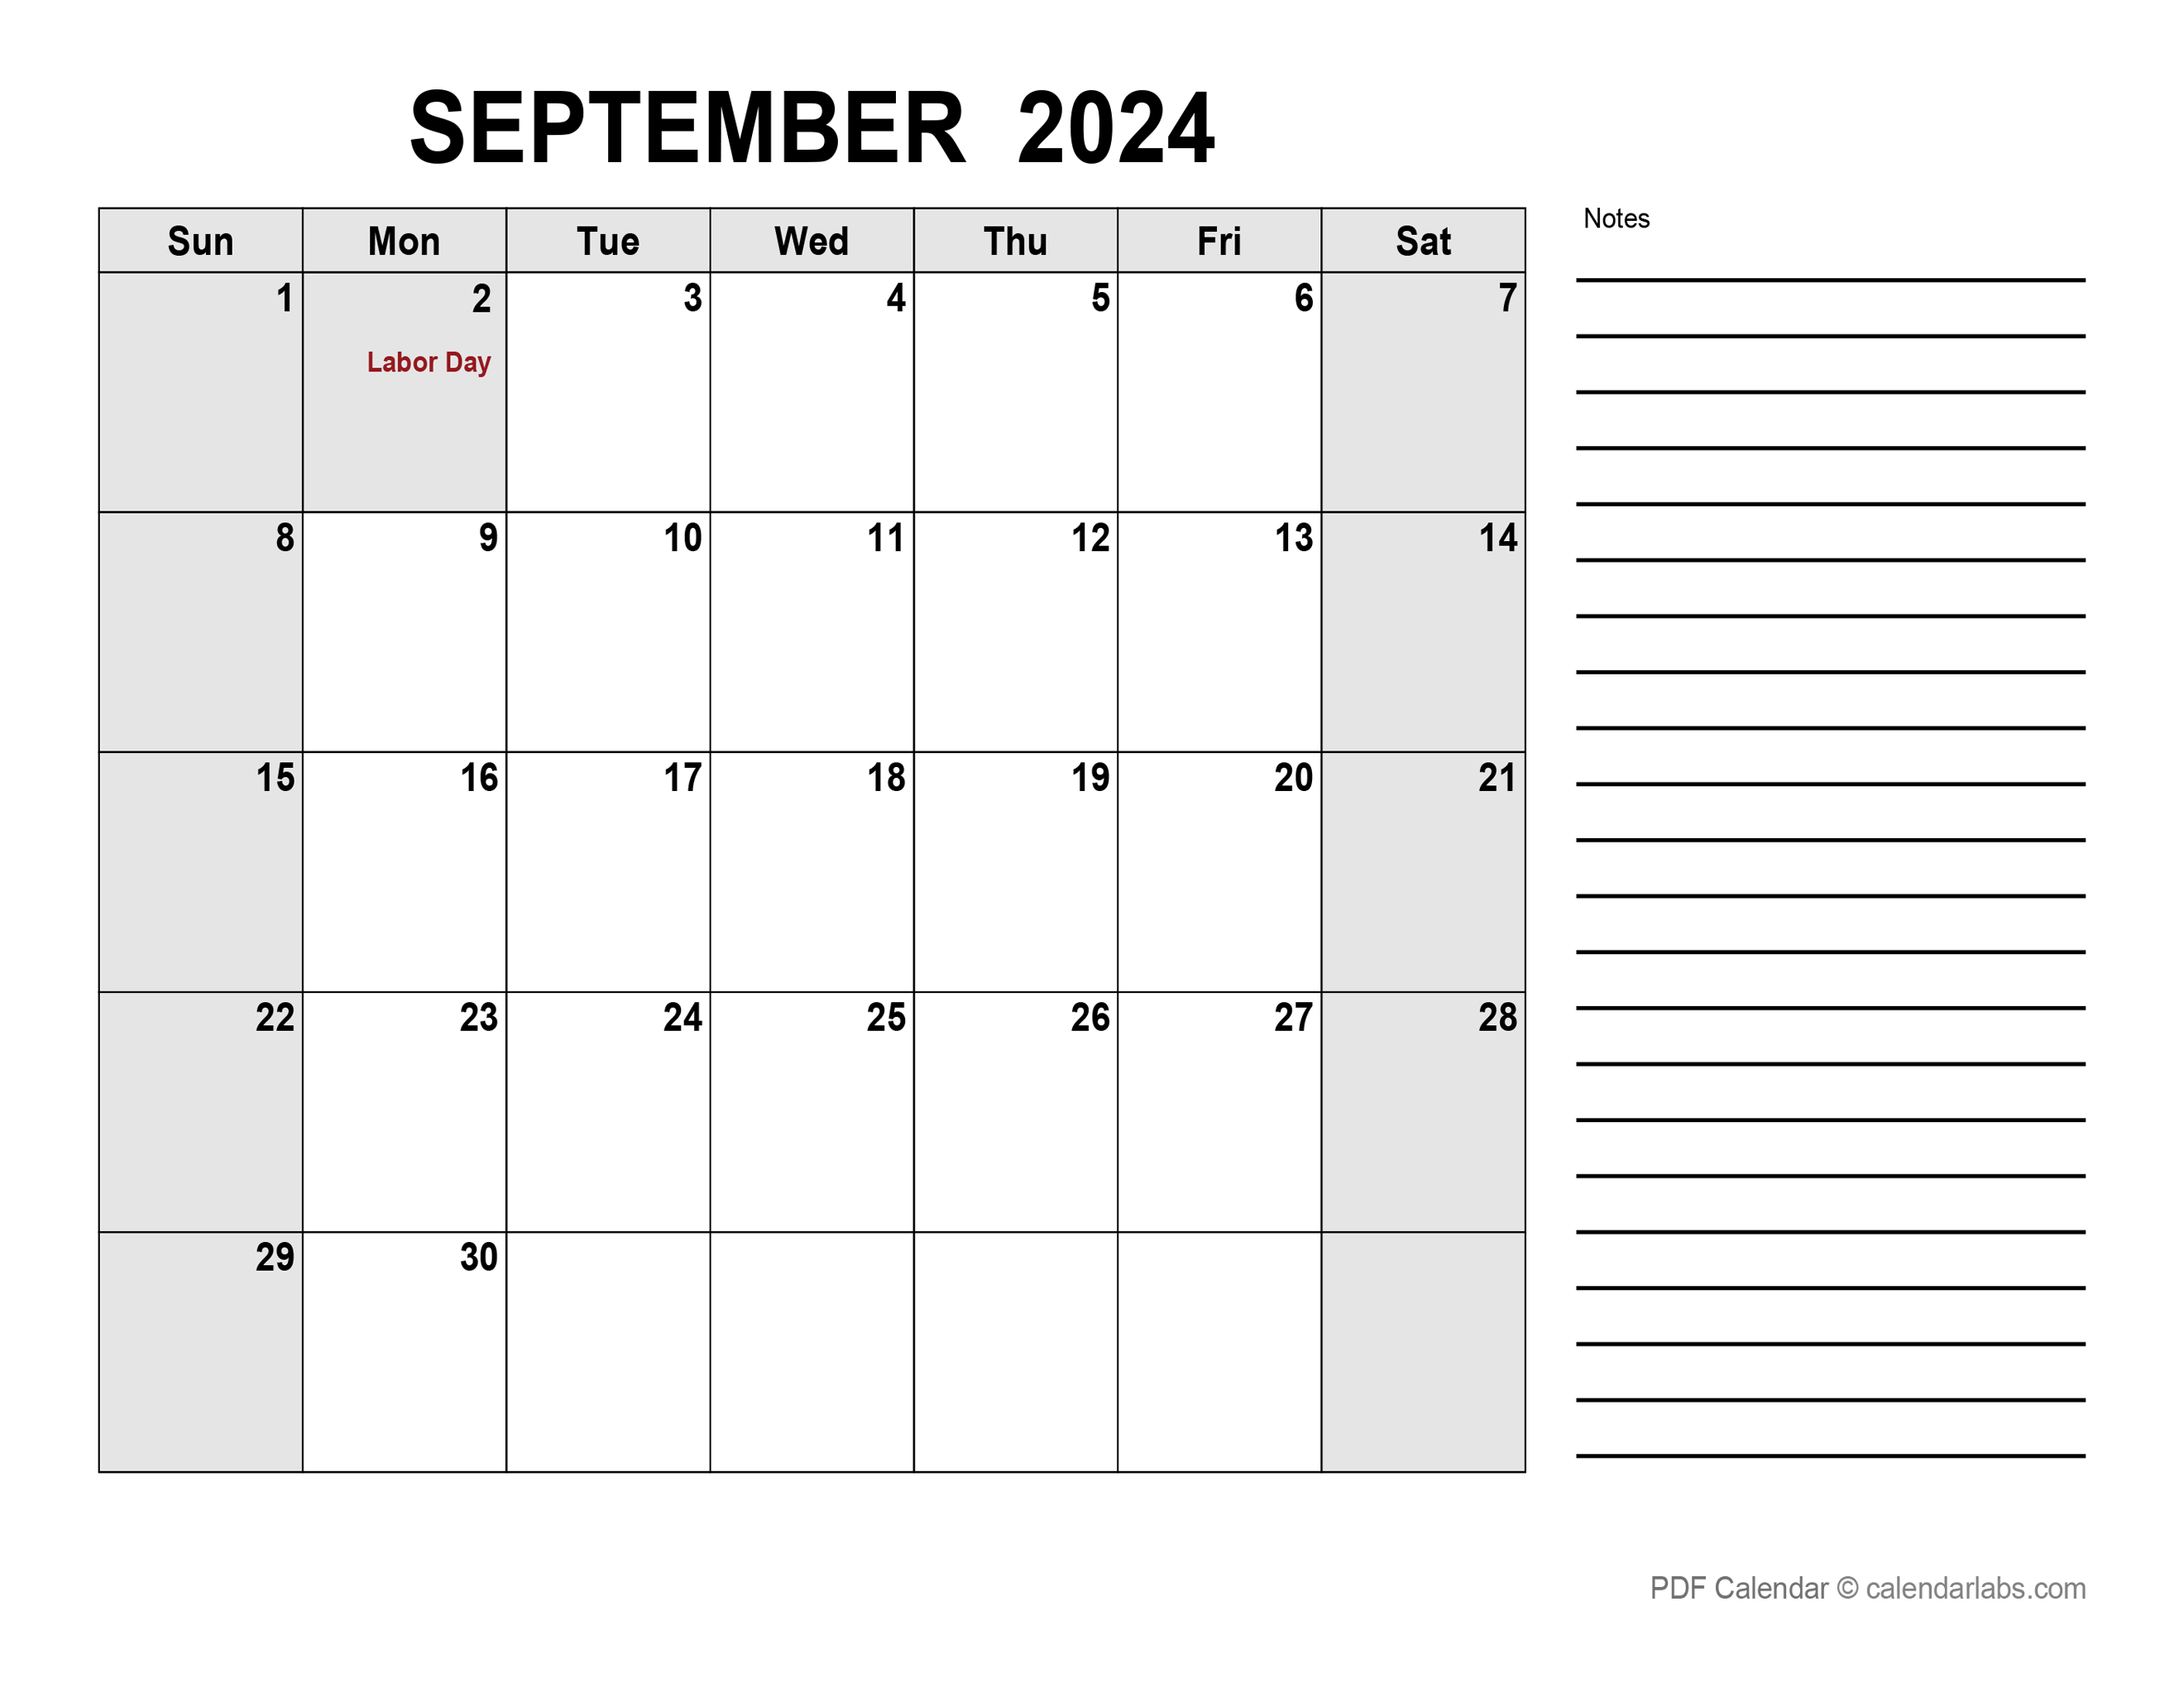 September 2024 Calendar | CalendarLabs